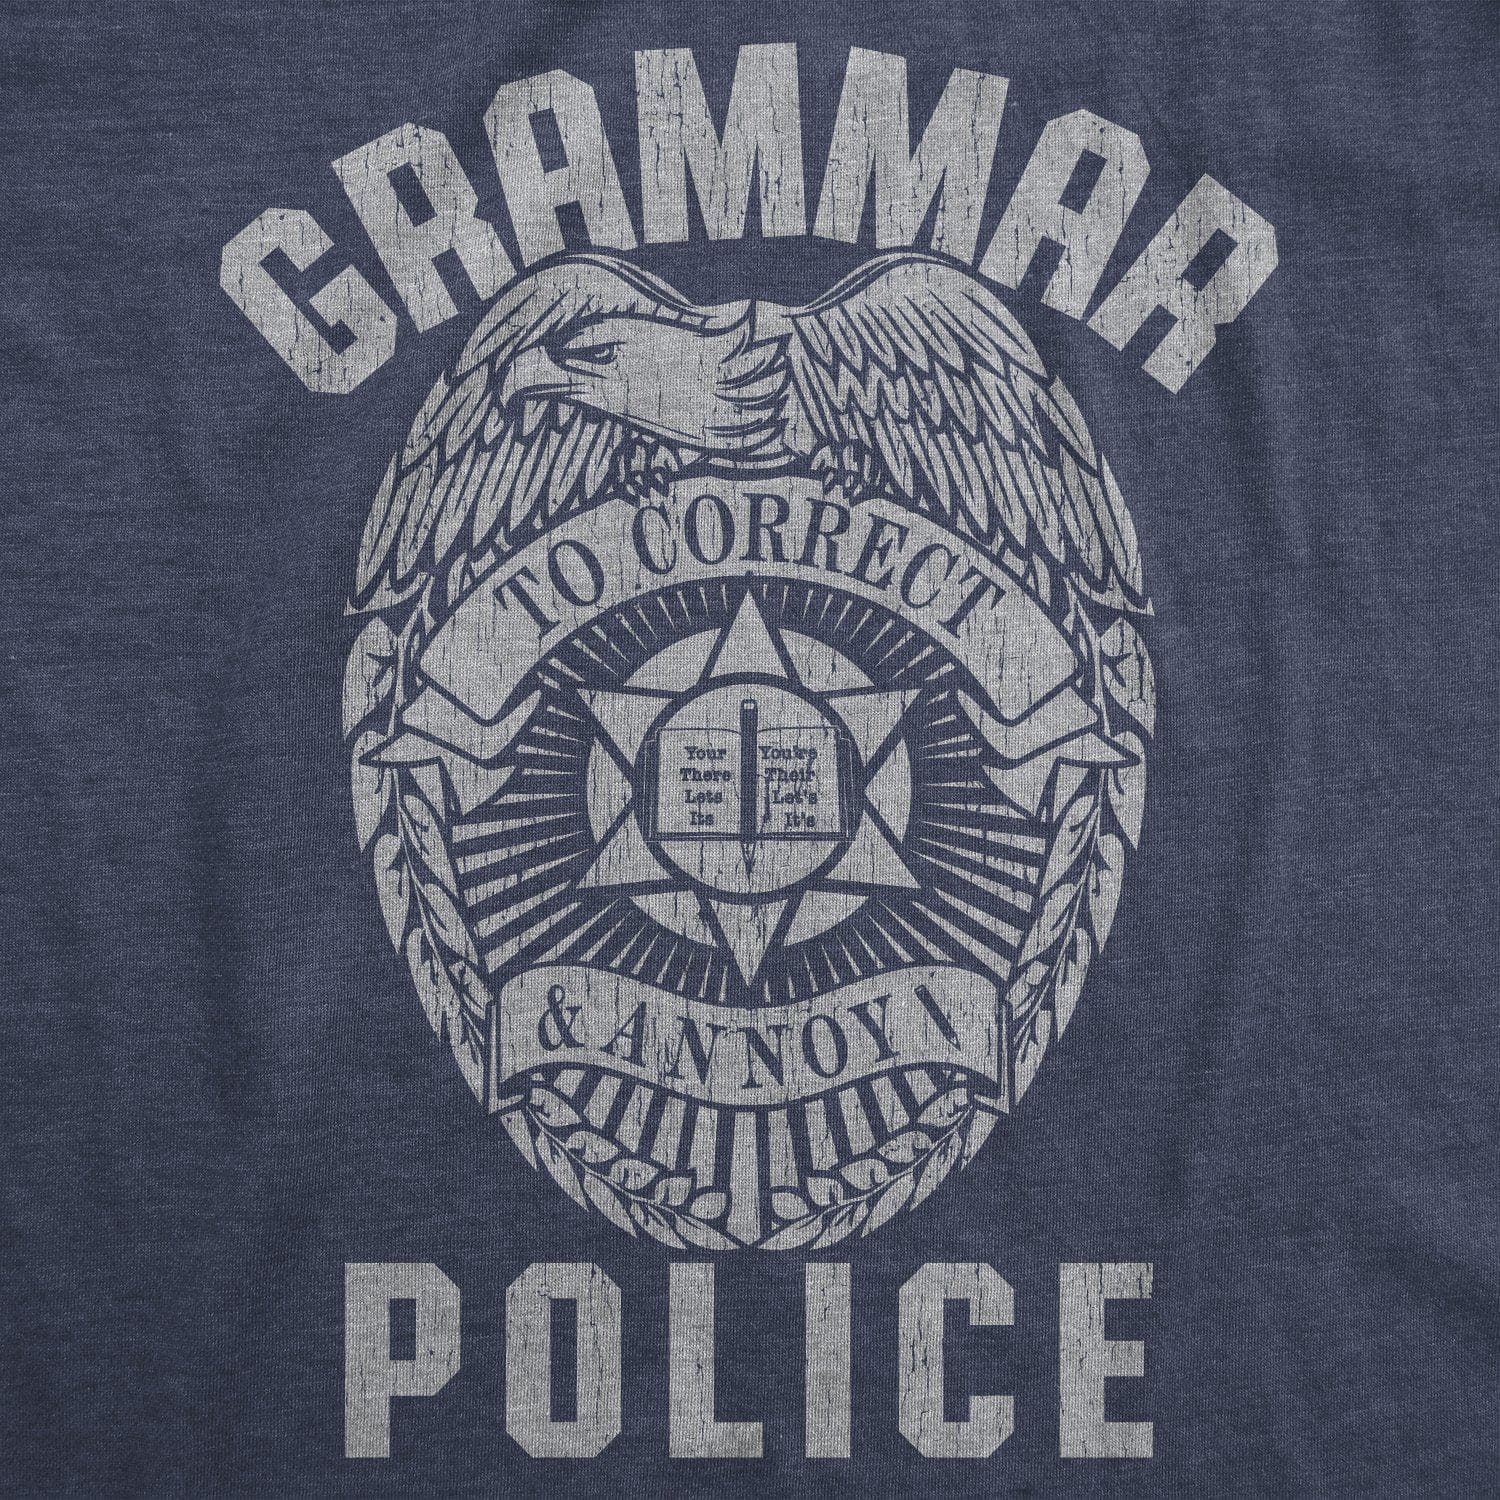 Grammar Police Women's Tshirt  -  Crazy Dog T-Shirts